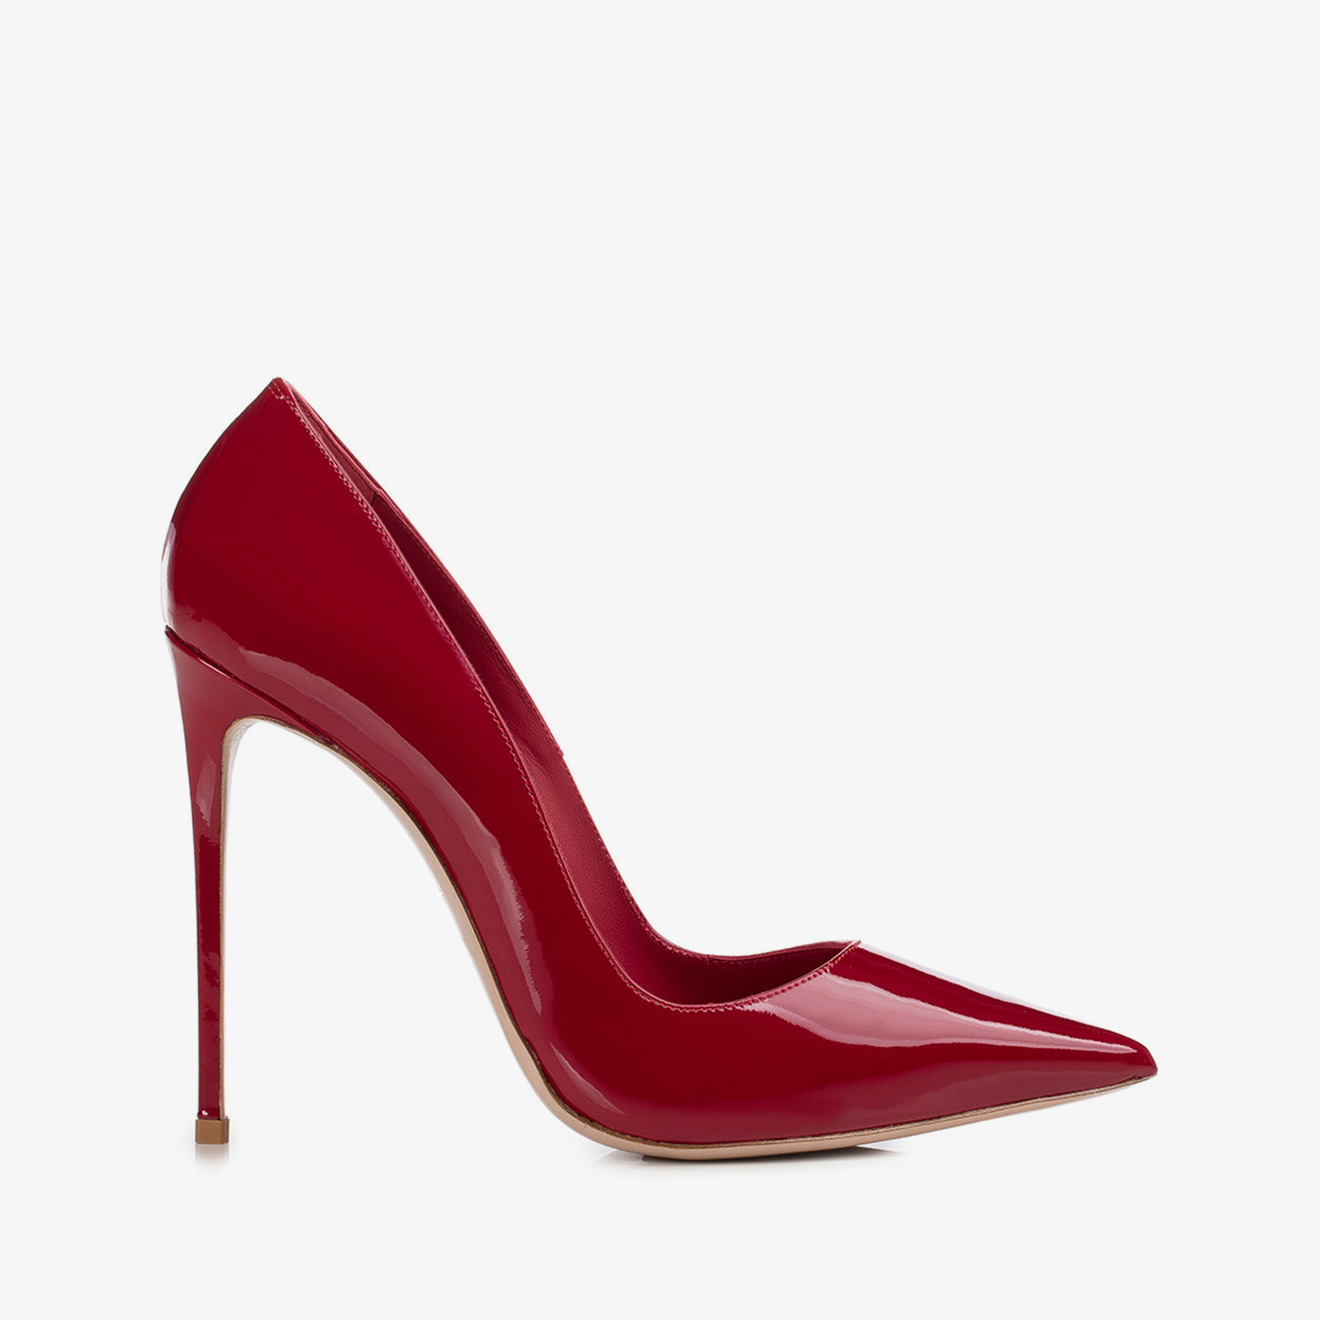 Red patent leather pump - Le Silla